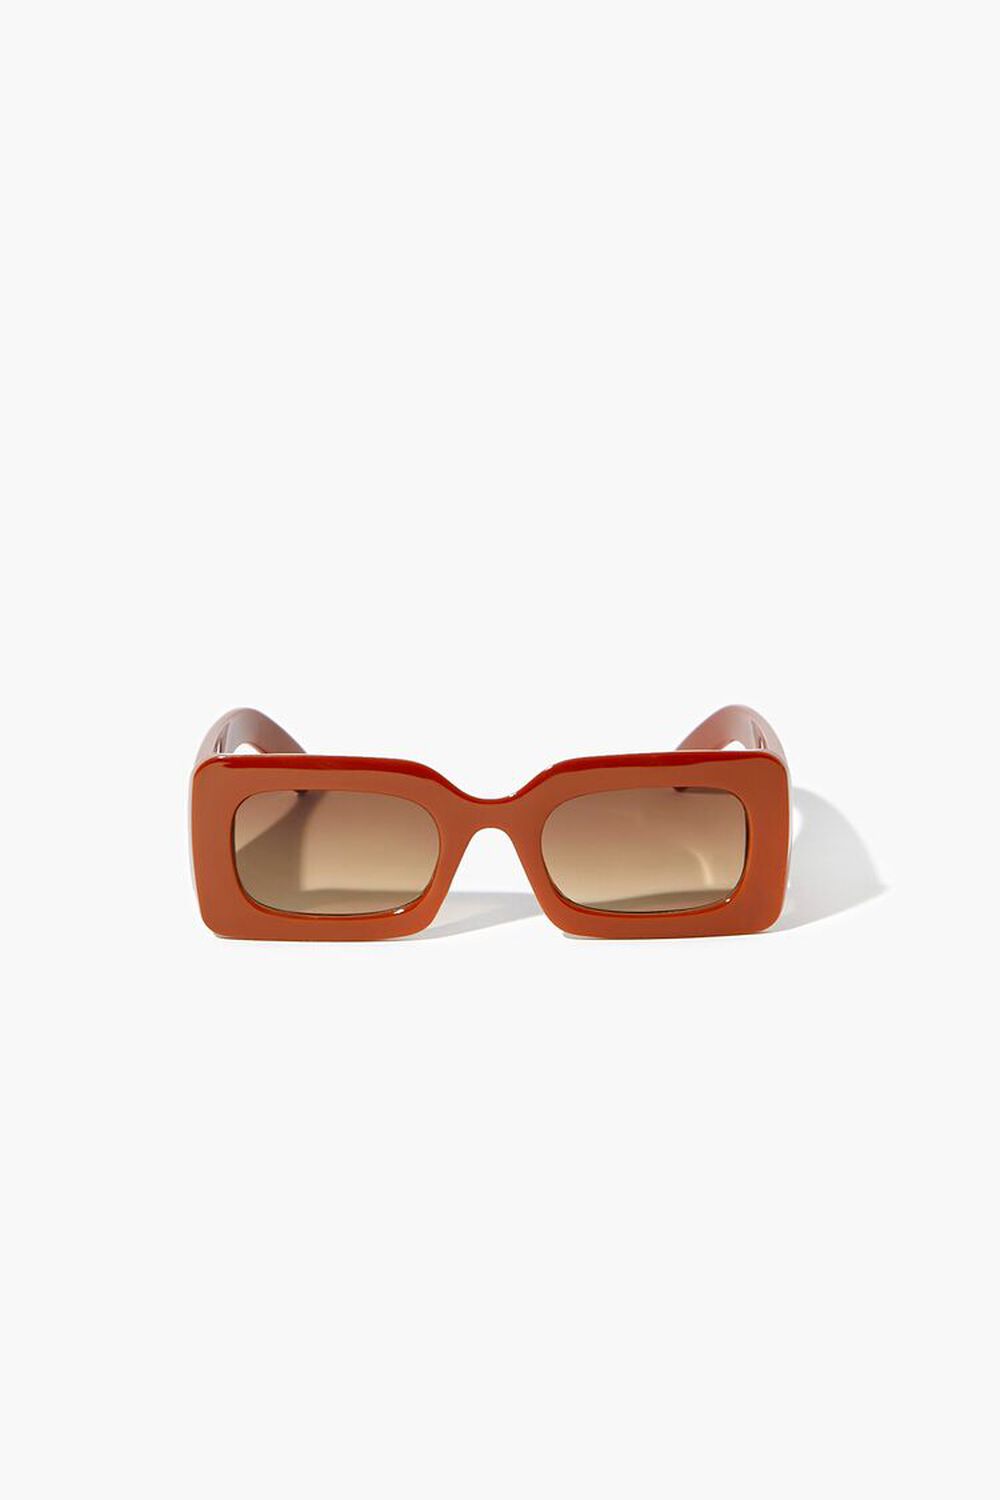 RUST/BROWN Rectangular Frame Sunglasses, image 1